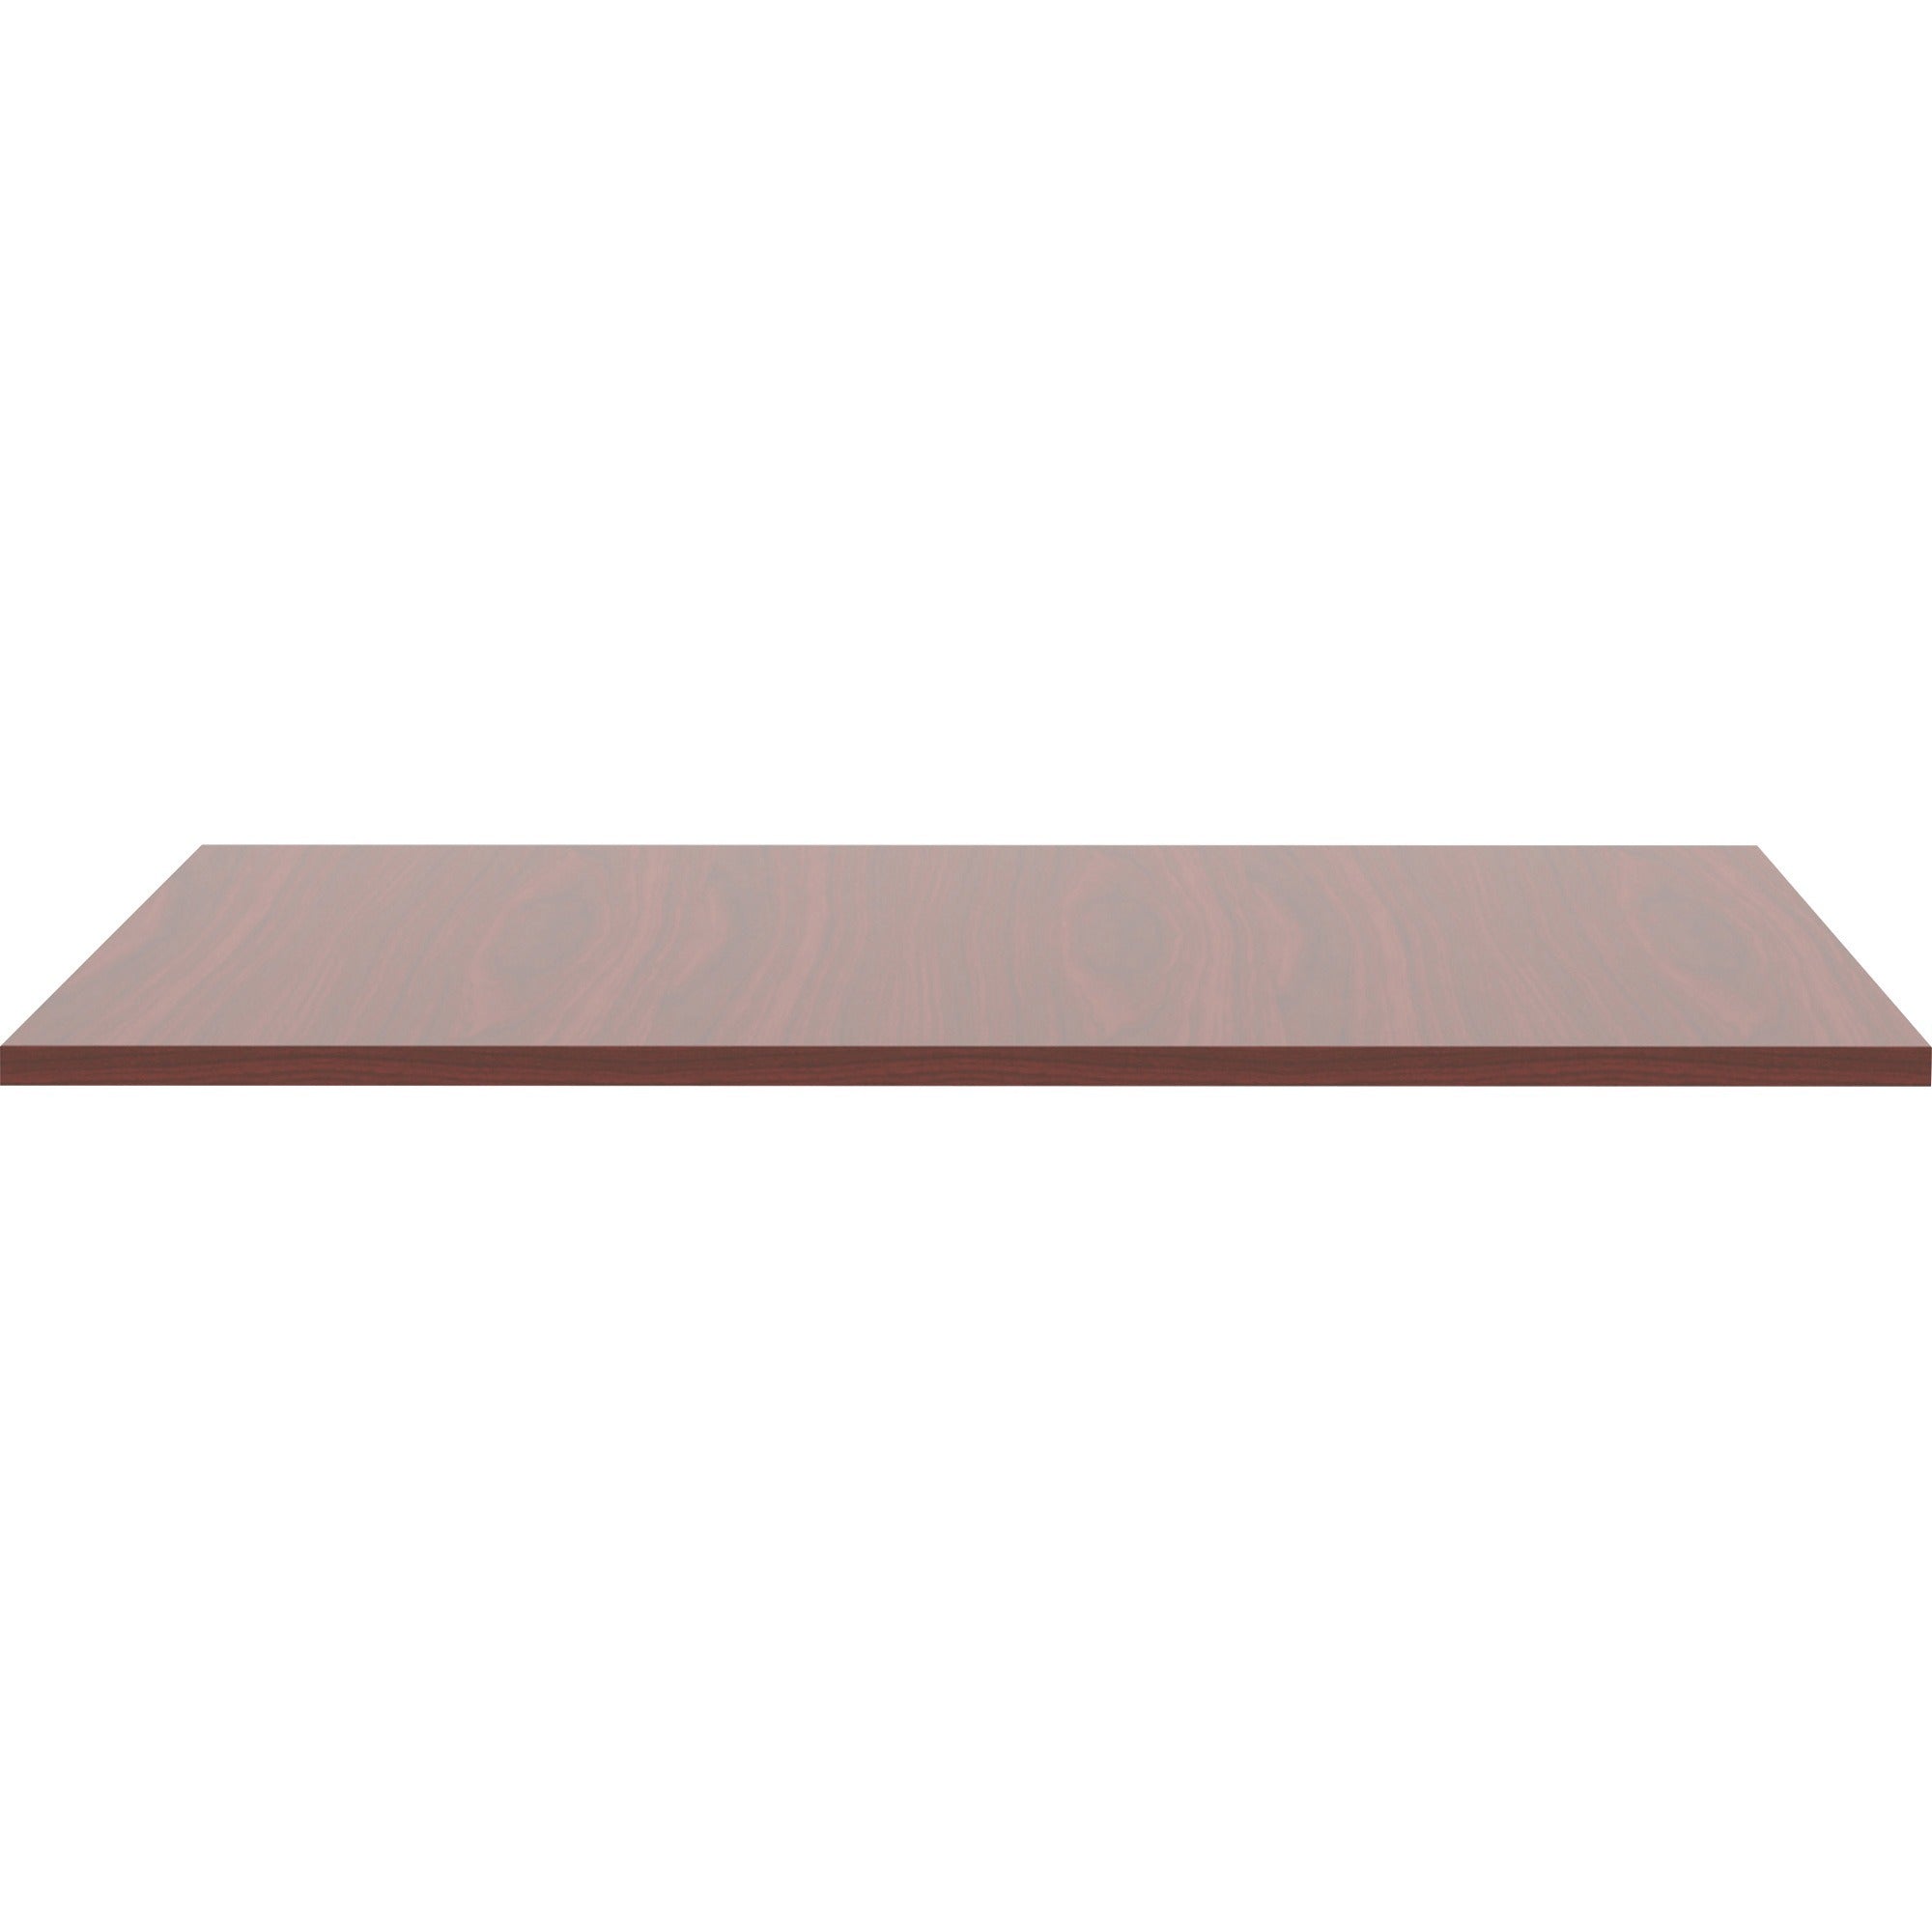 lorell-revelance-conference-rectangular-tabletop-716-x-473-x-1-x-1-material-laminate-finish-mahogany_llr16257 - 3